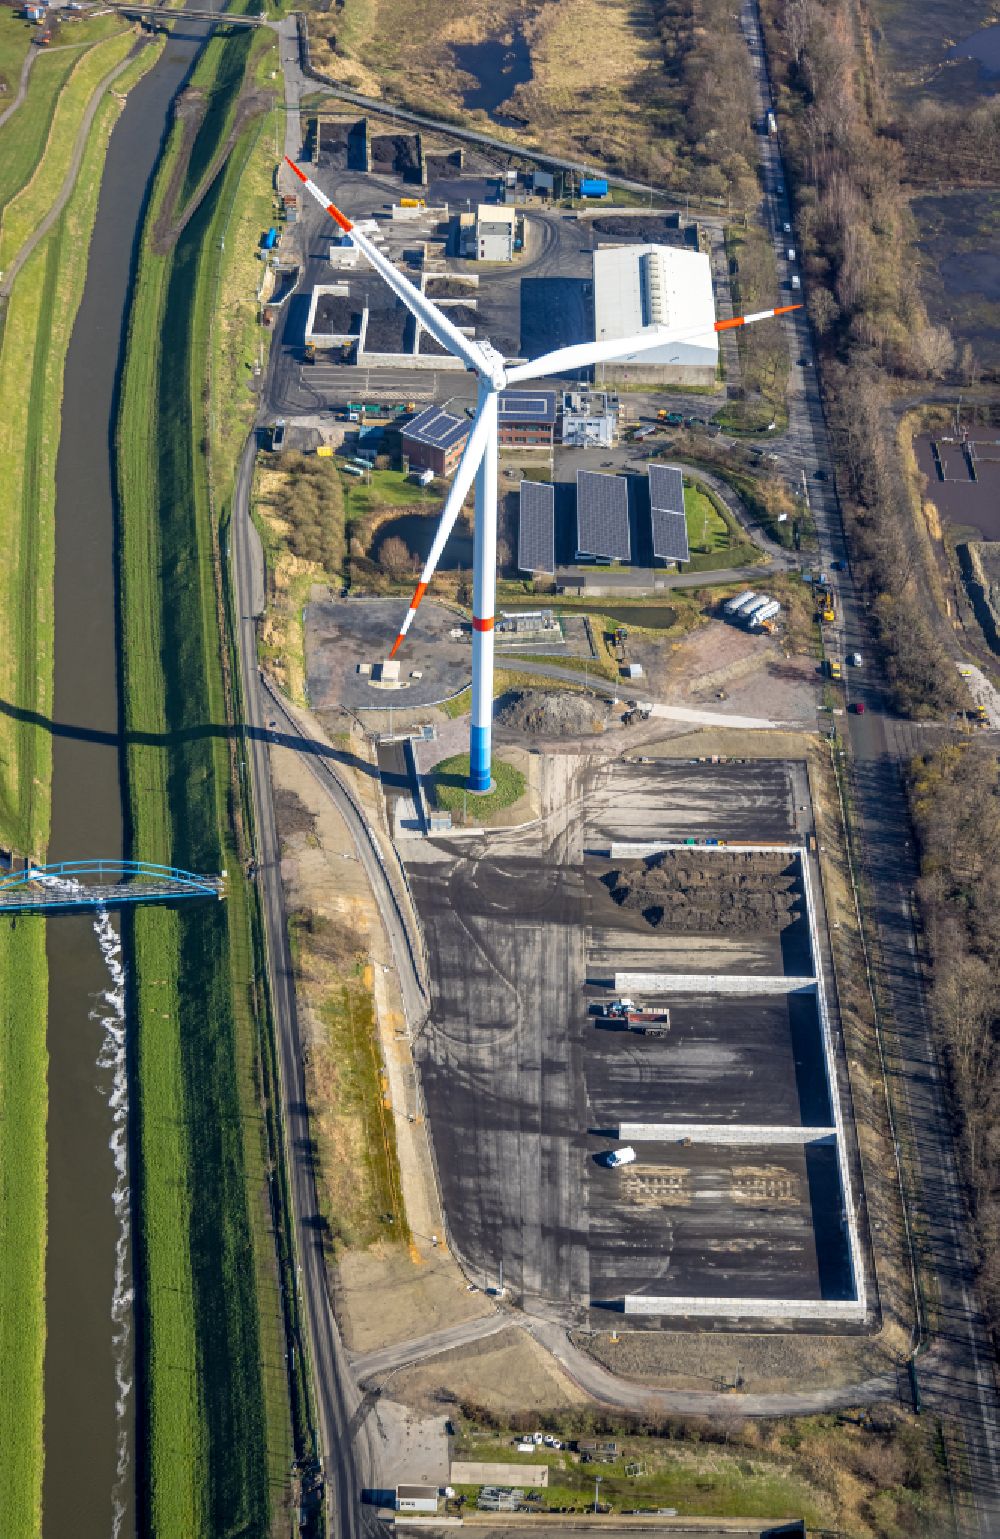 Bottrop from above - Wind turbine (WT) - wind turbine on the factory premises of Prosper coke plant in Bottrop in North Rhine-Westphalia